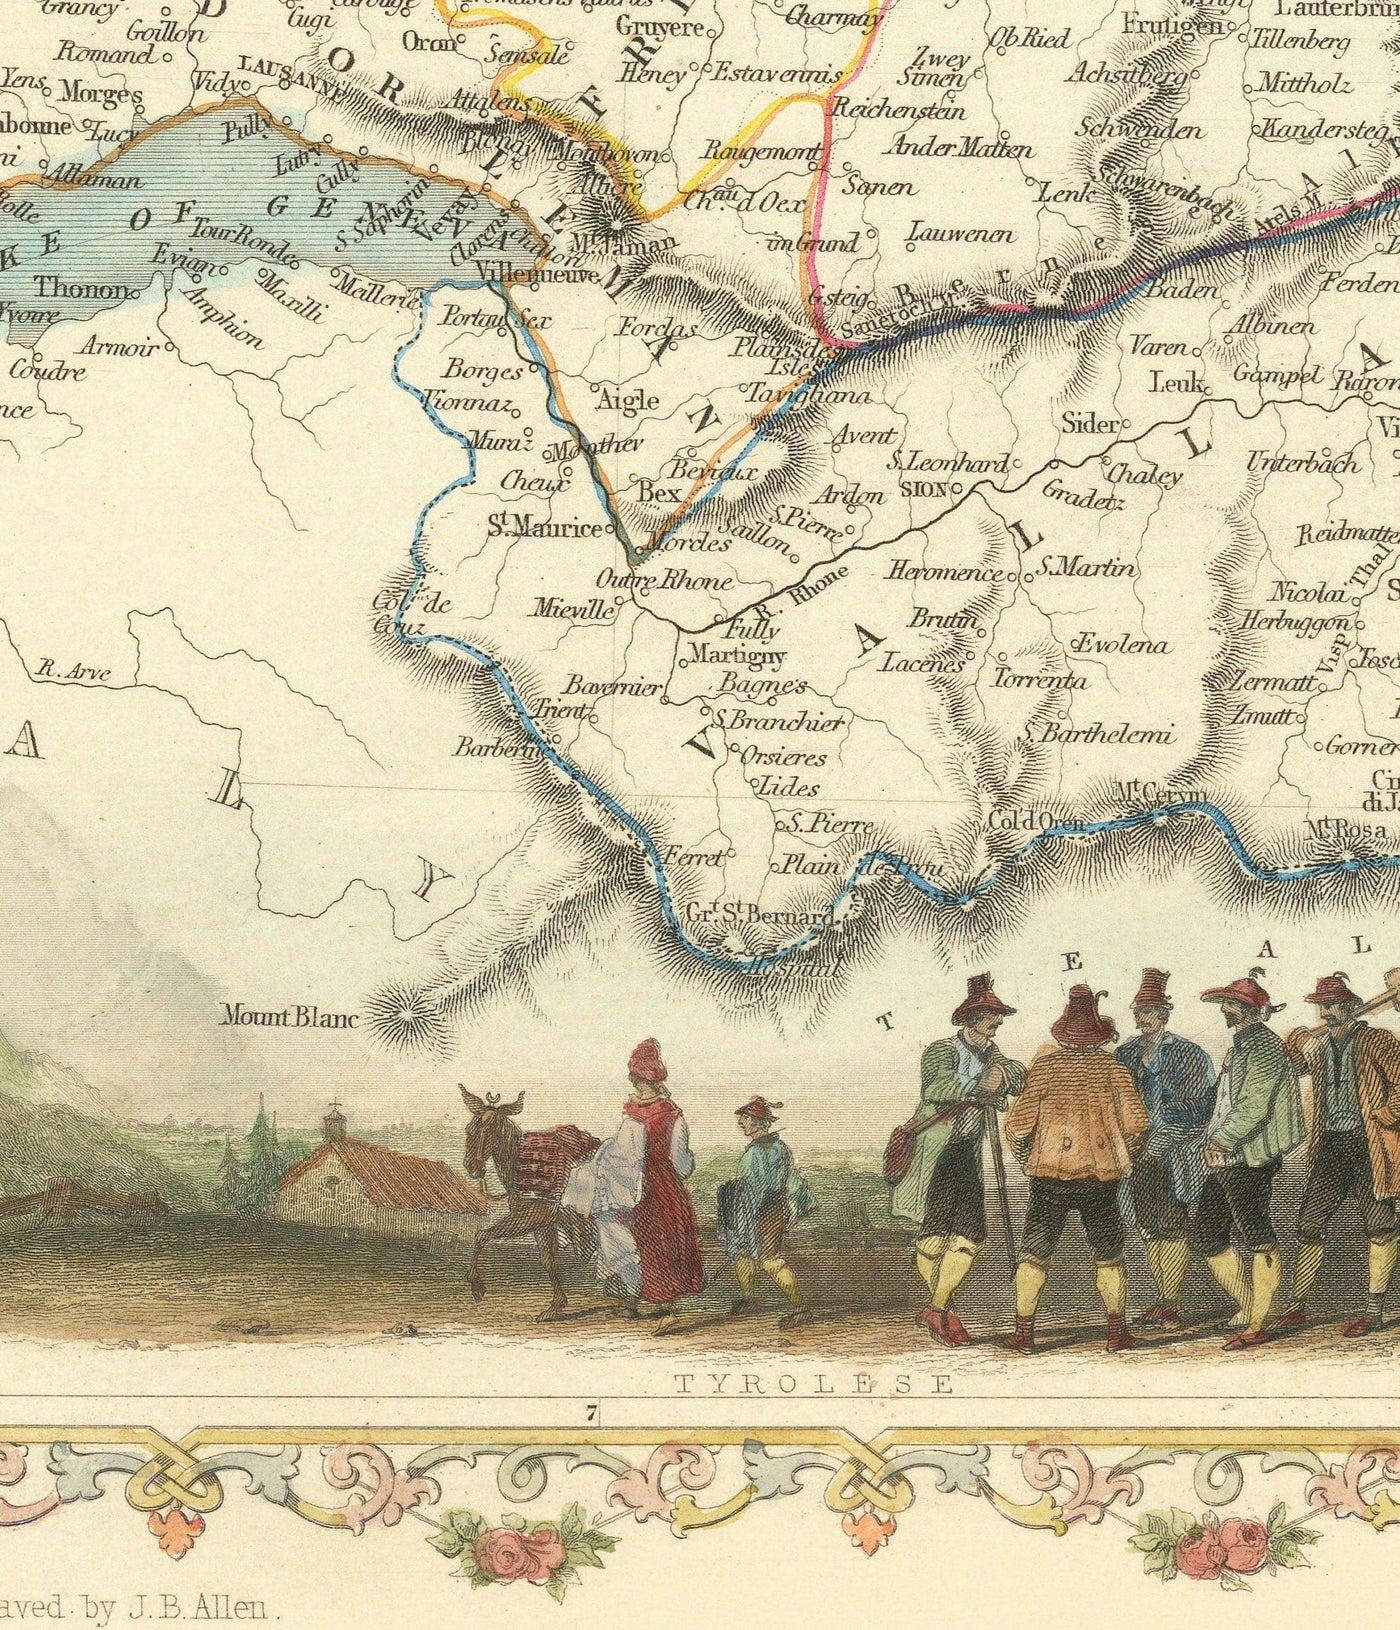 Antiguo mapa coloreado a mano de Suiza, 1851 - Berna, Zúrich, Cantones, Ginebra, Lagos, Zermatt, Guillermo Tell